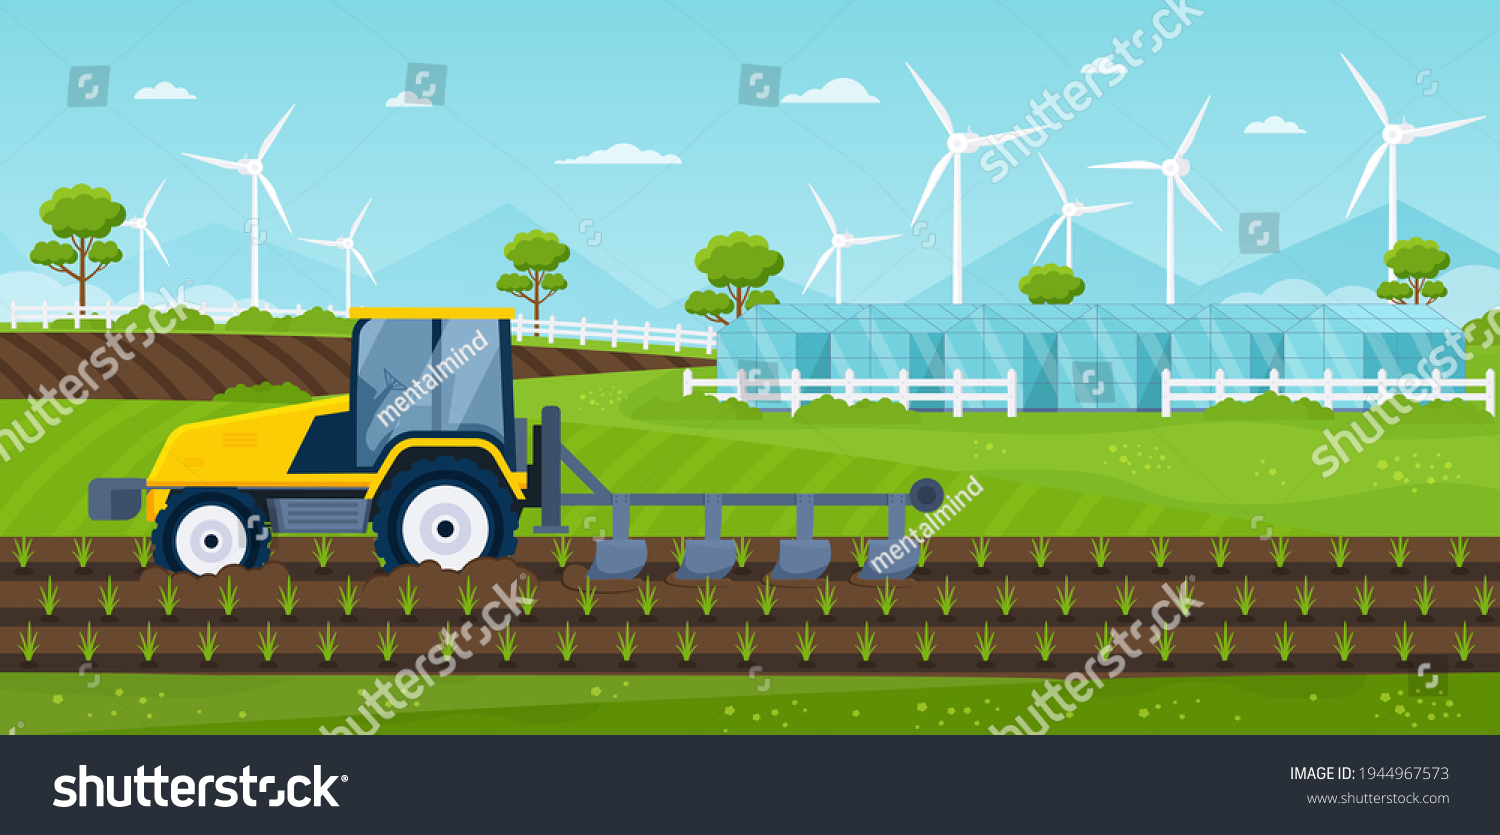 SVG of Automated greenhouse. Robotic glasshouse farming. Future farming technology. Modern vegitables growing irrigation automation. Flat cartoon vector illustration concept design. Simple art svg